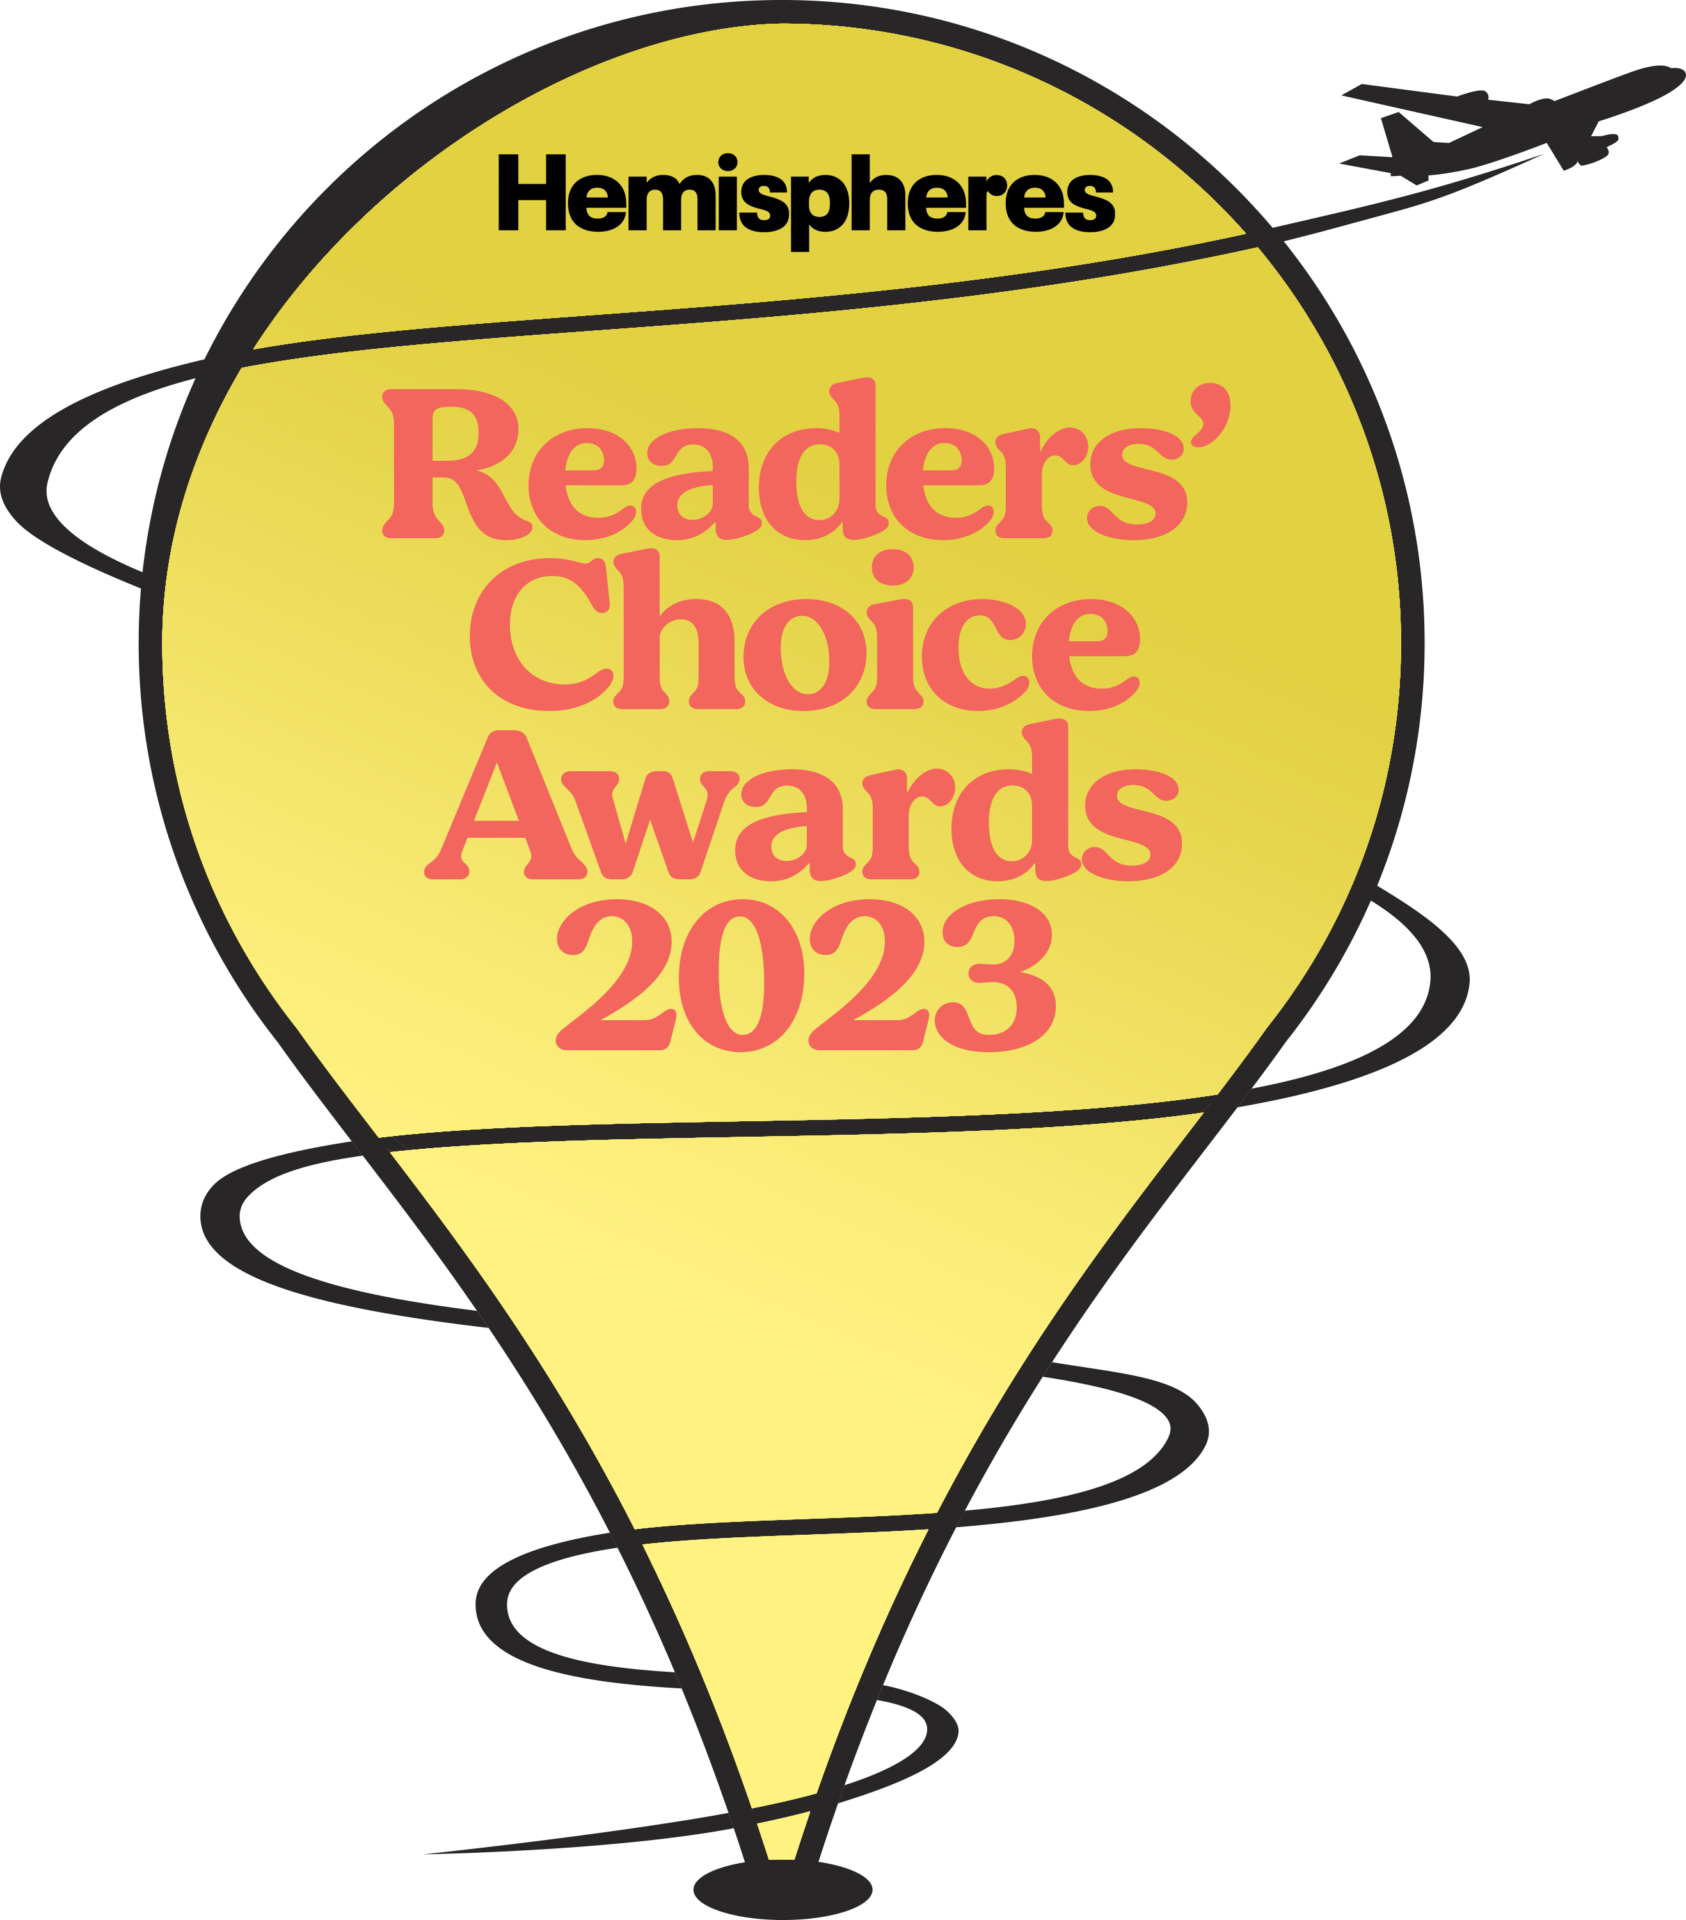 Readers' Choice Awards 2023 Hemispheres